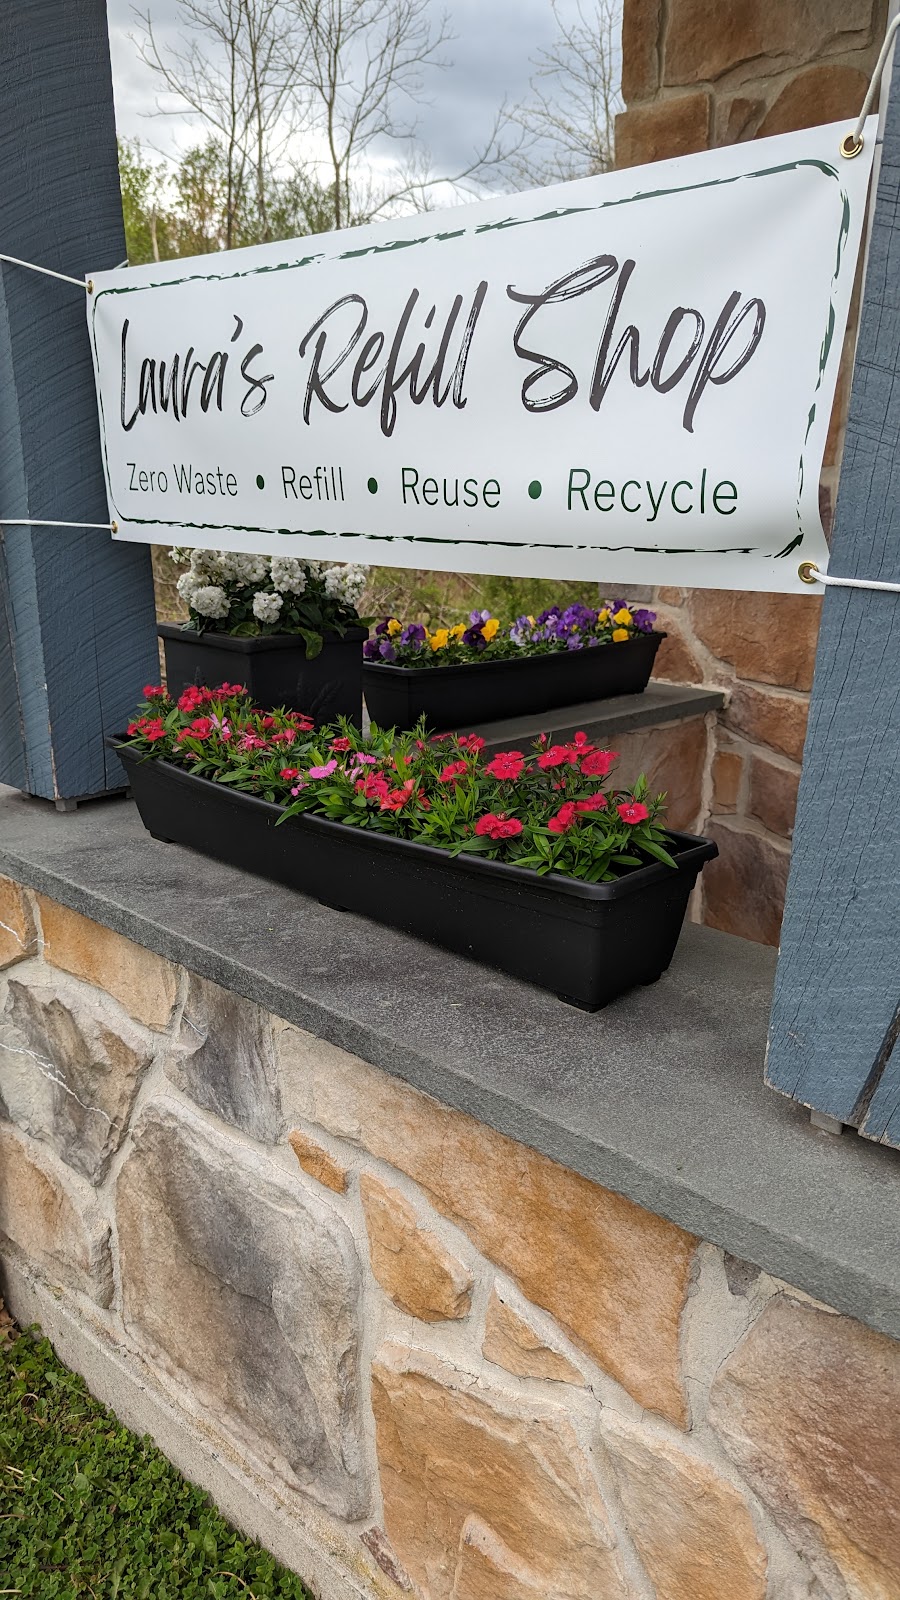 Lauras Refill Shop (A Zero Waste Store) | 2325 Pottstown Pike, Pottstown, PA 19465 | Phone: (484) 366-1290